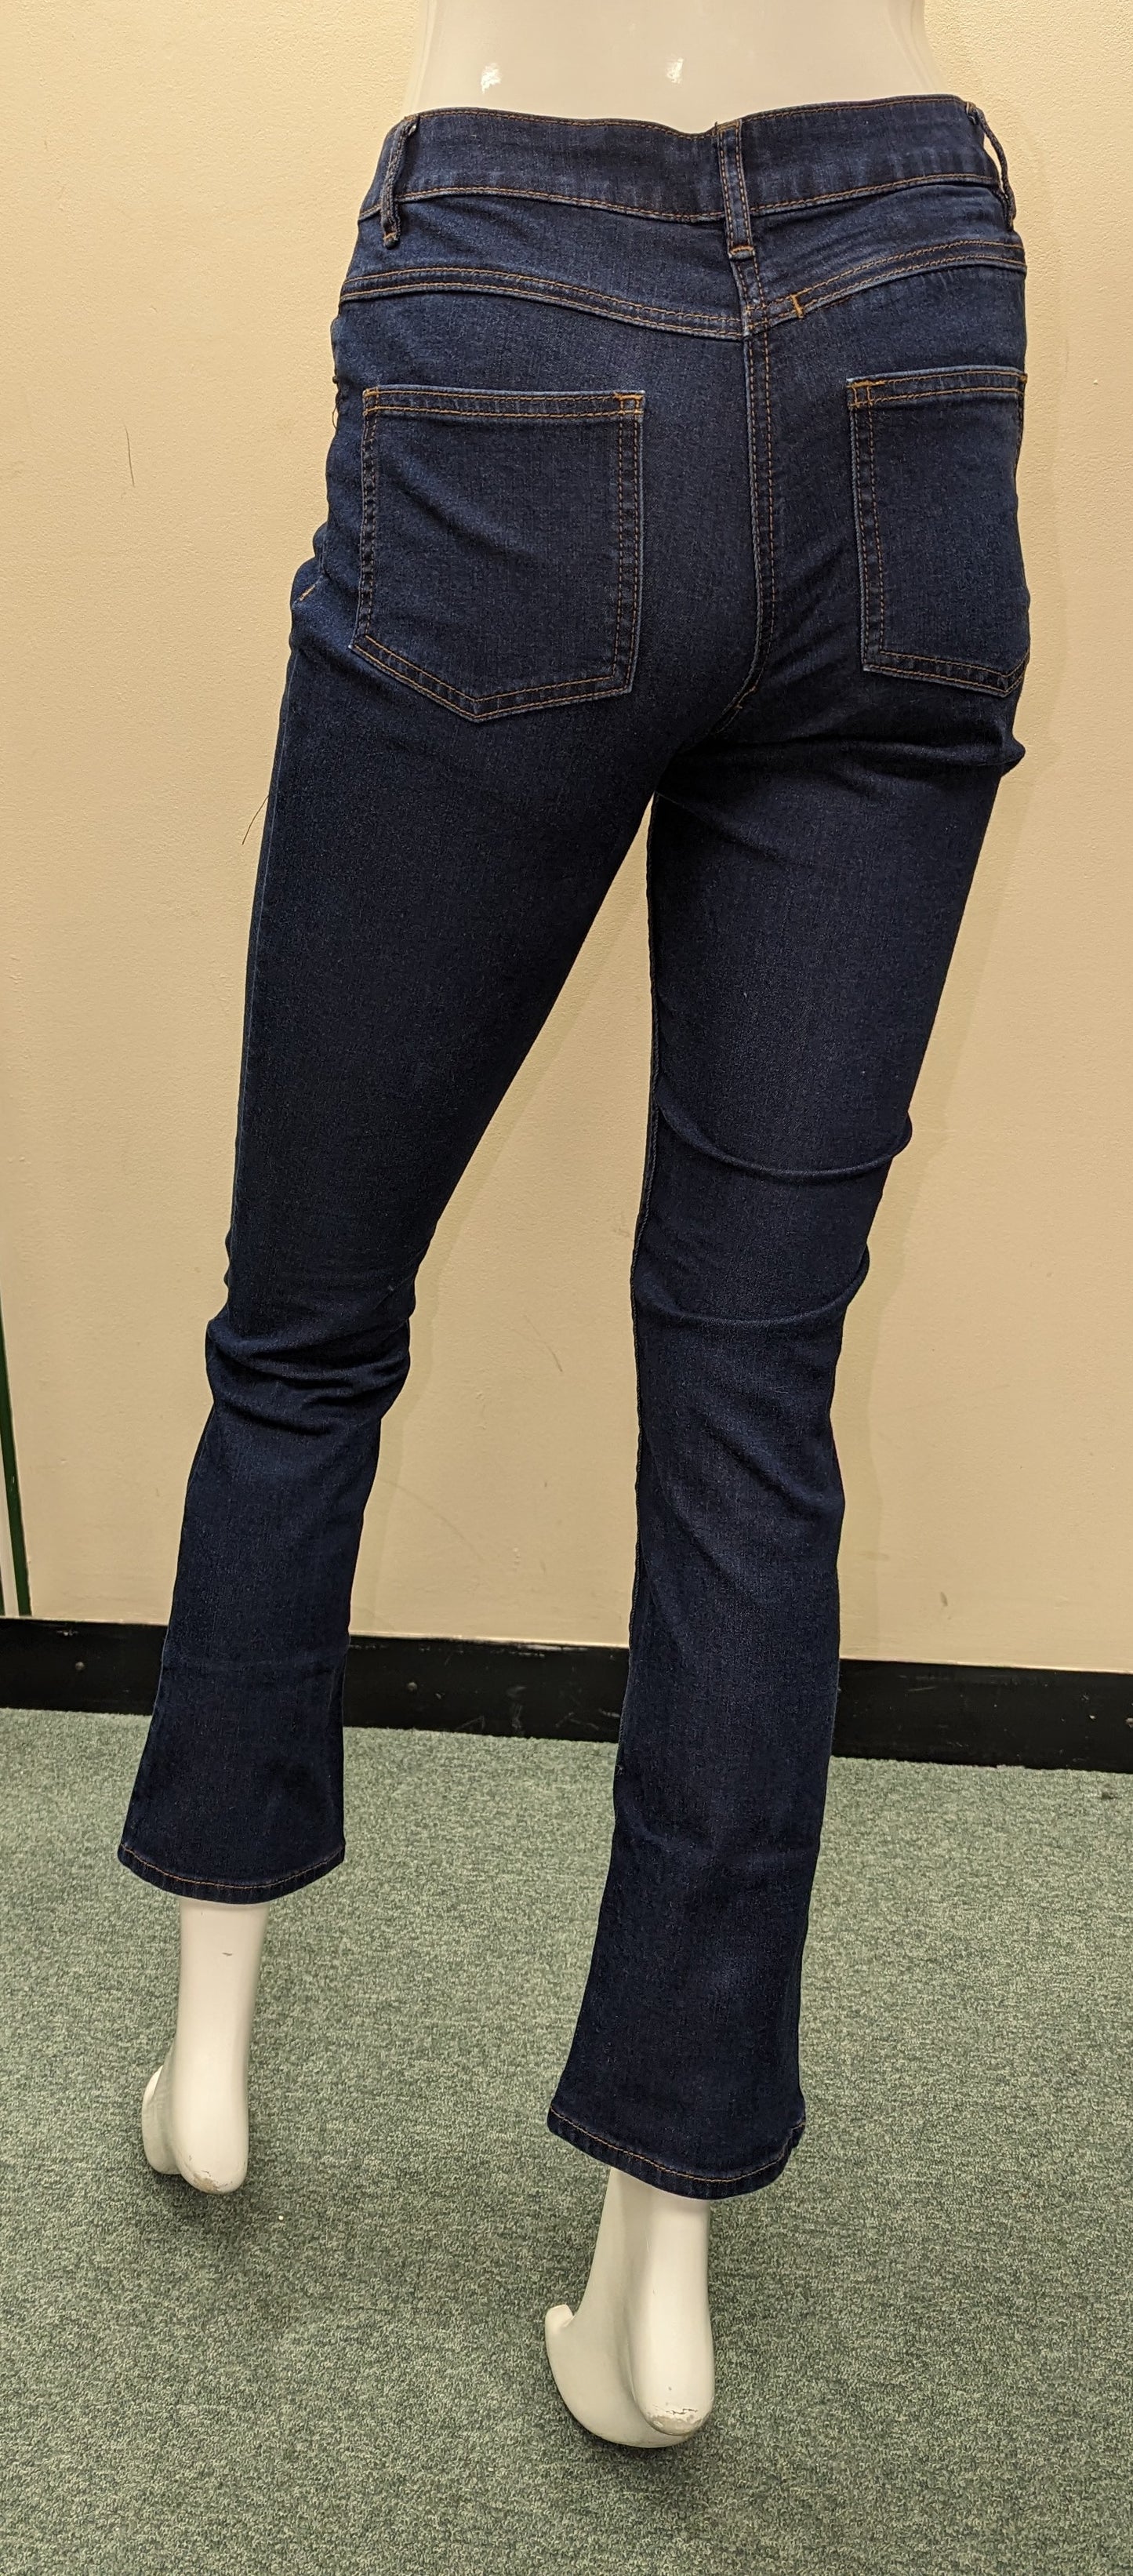 Ladies Rohan Jeans - Size 8R